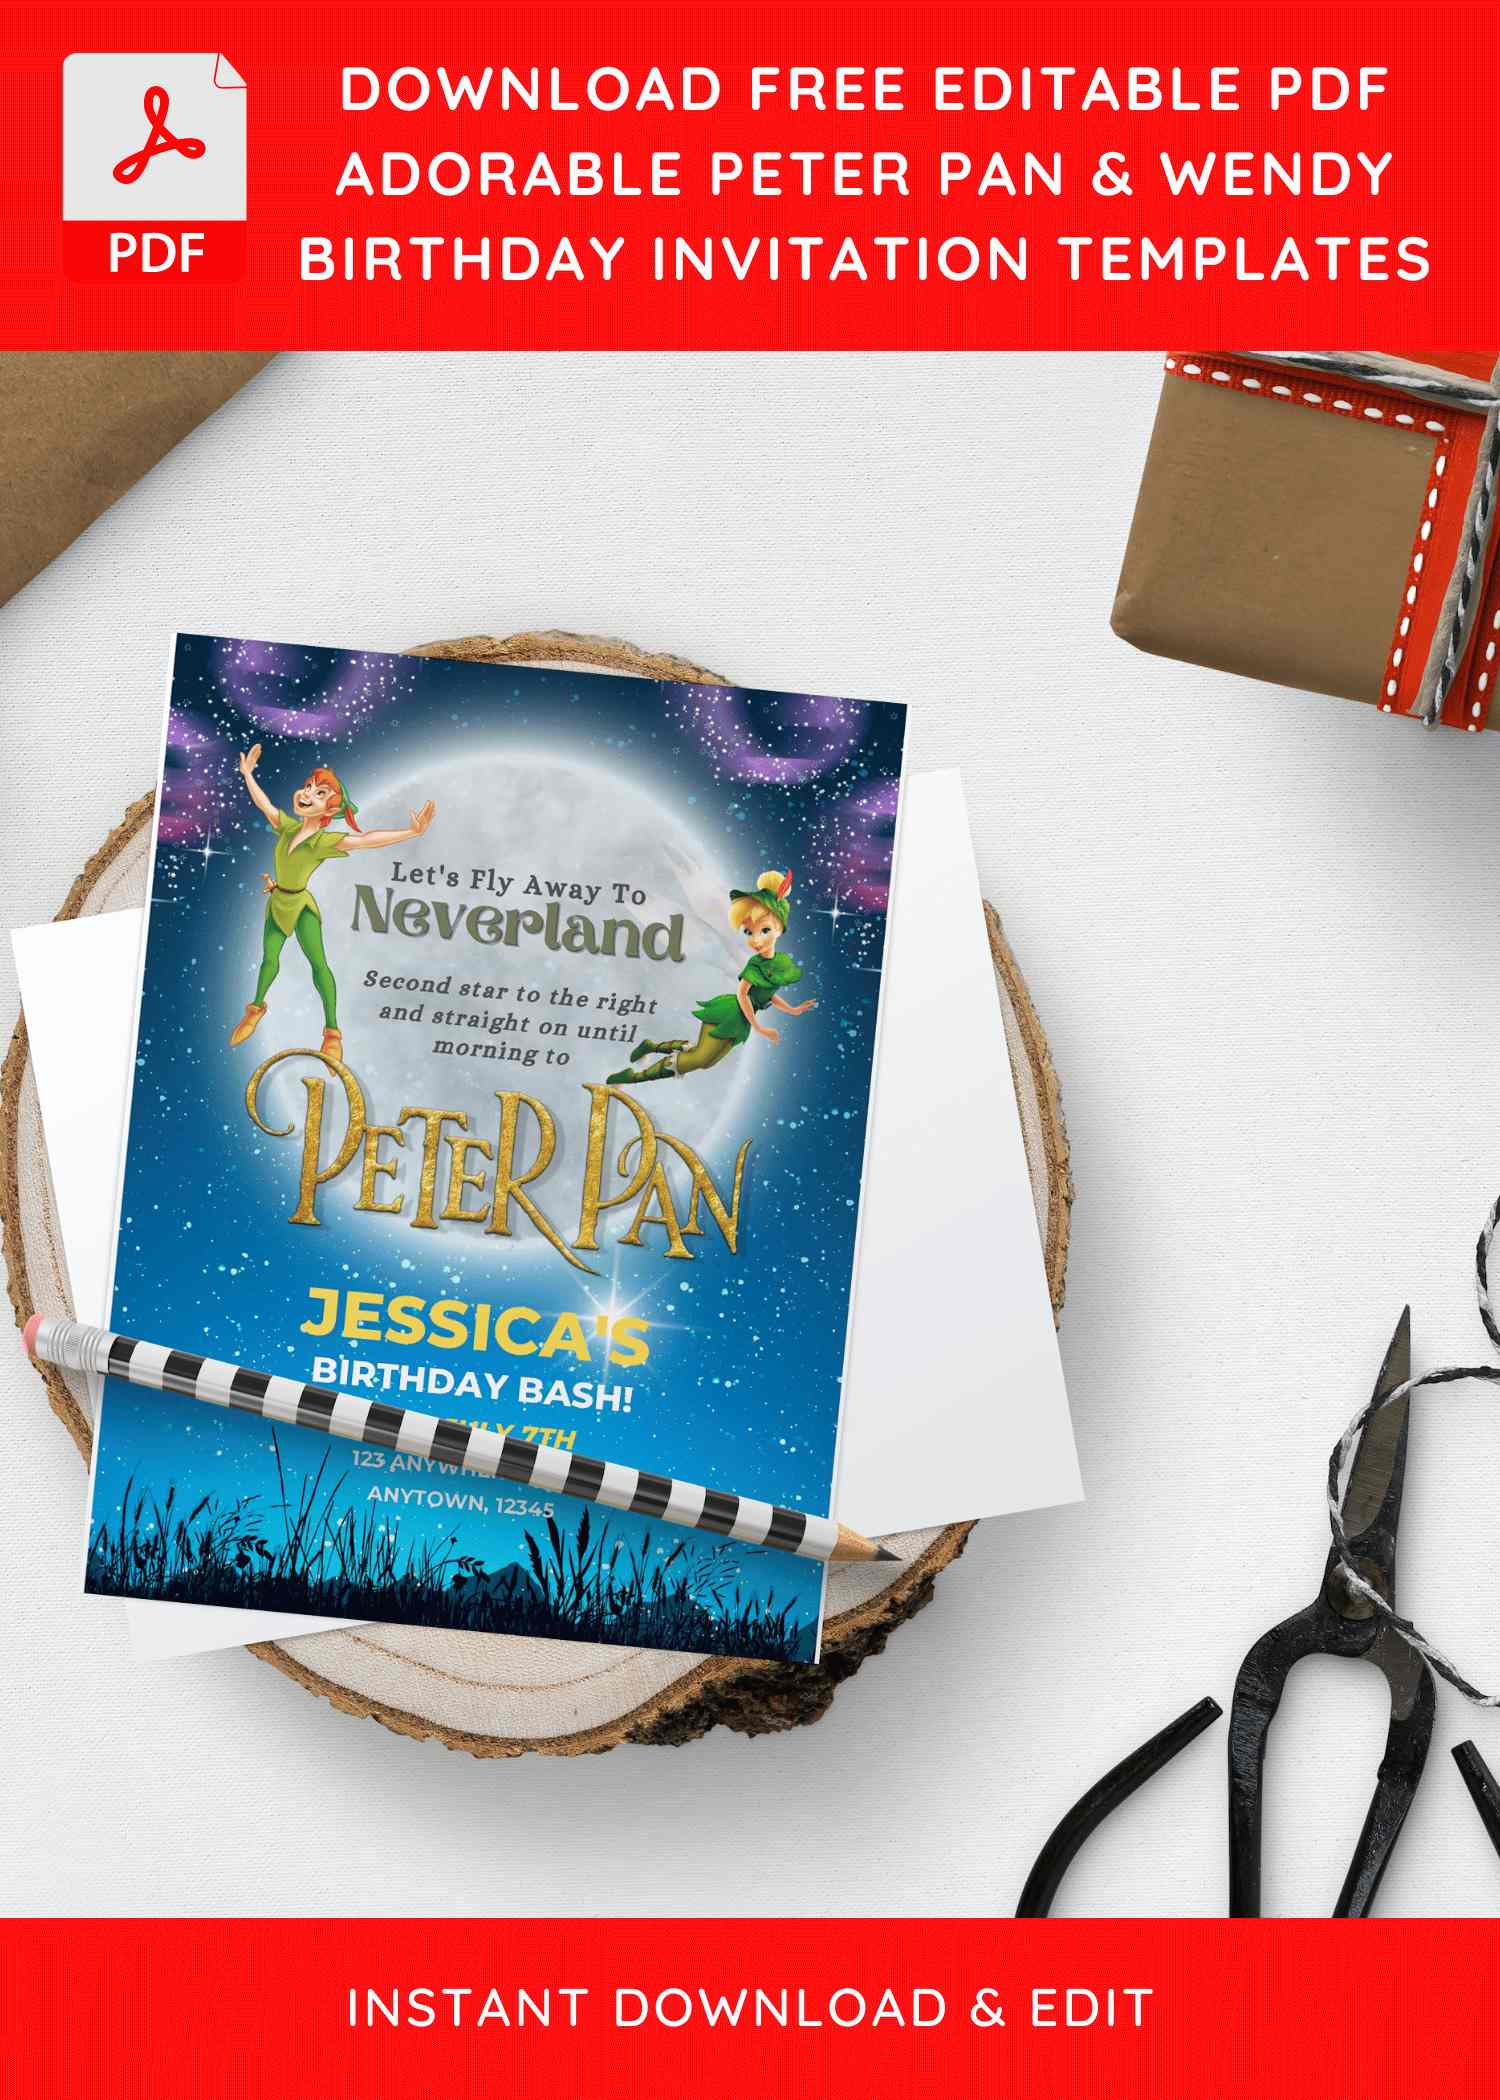 Free Editable PDF) Adorable Peter Pan & Wendy Birthday Invitation